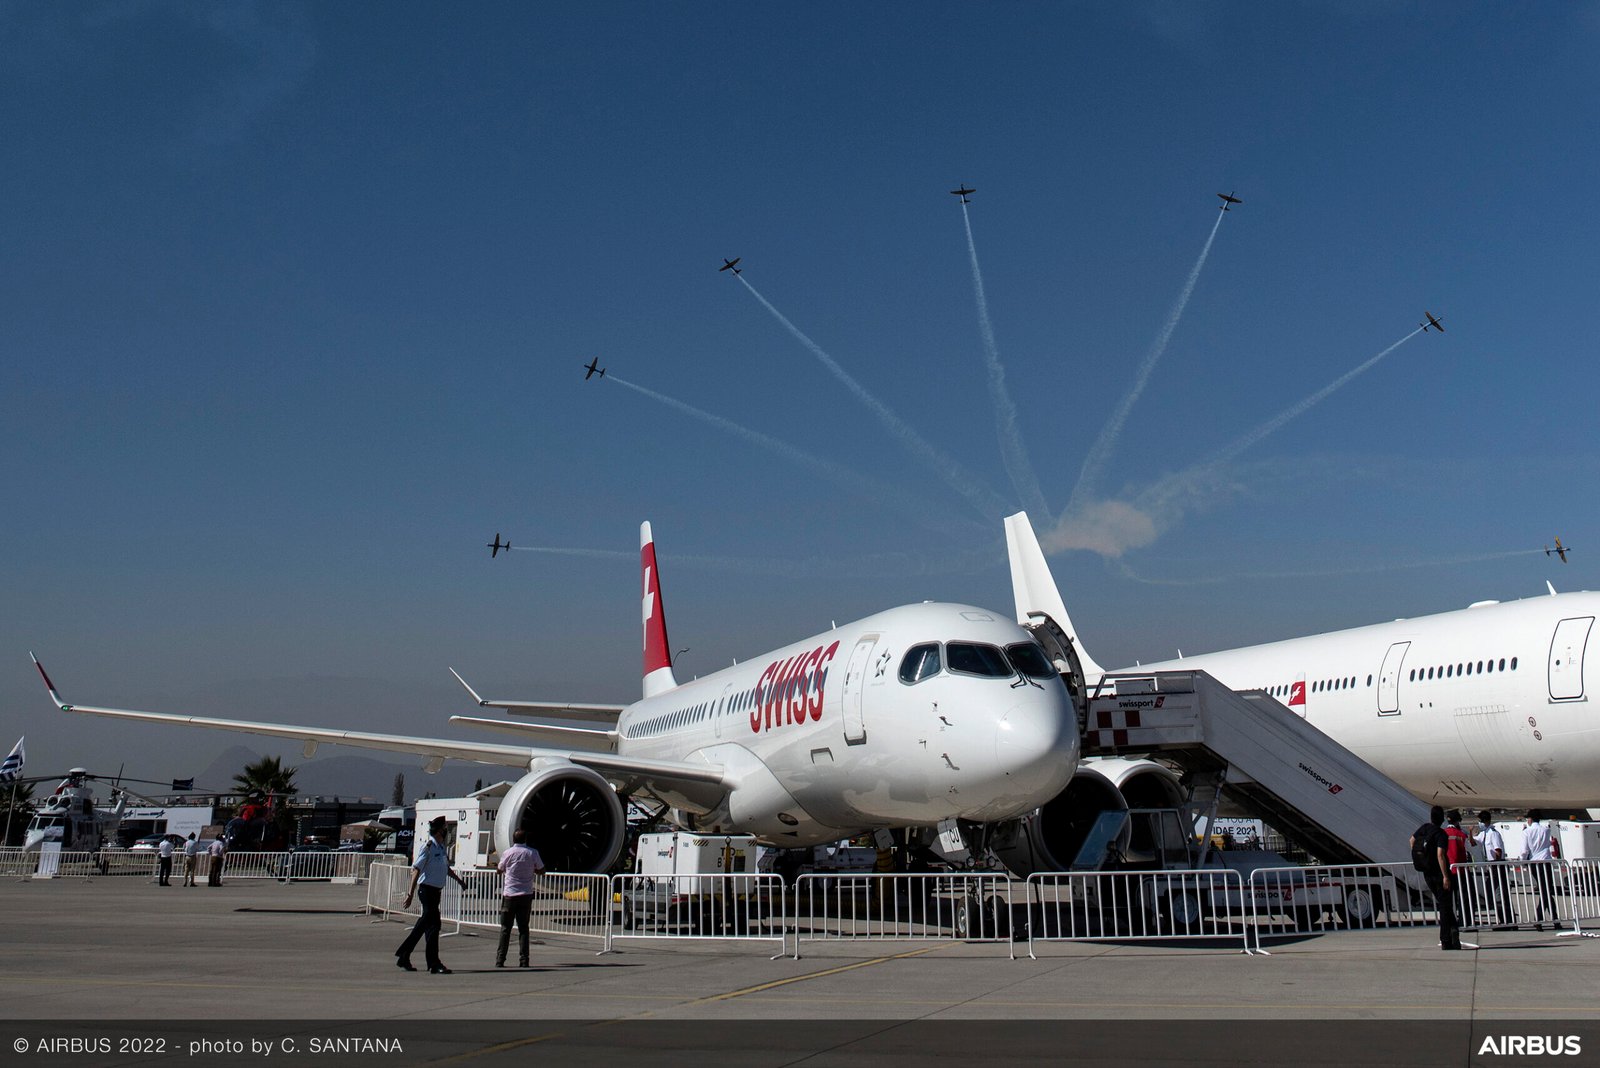 Airbus A220-300 de Swiss en FIDAE 2022. Foto: Airbus